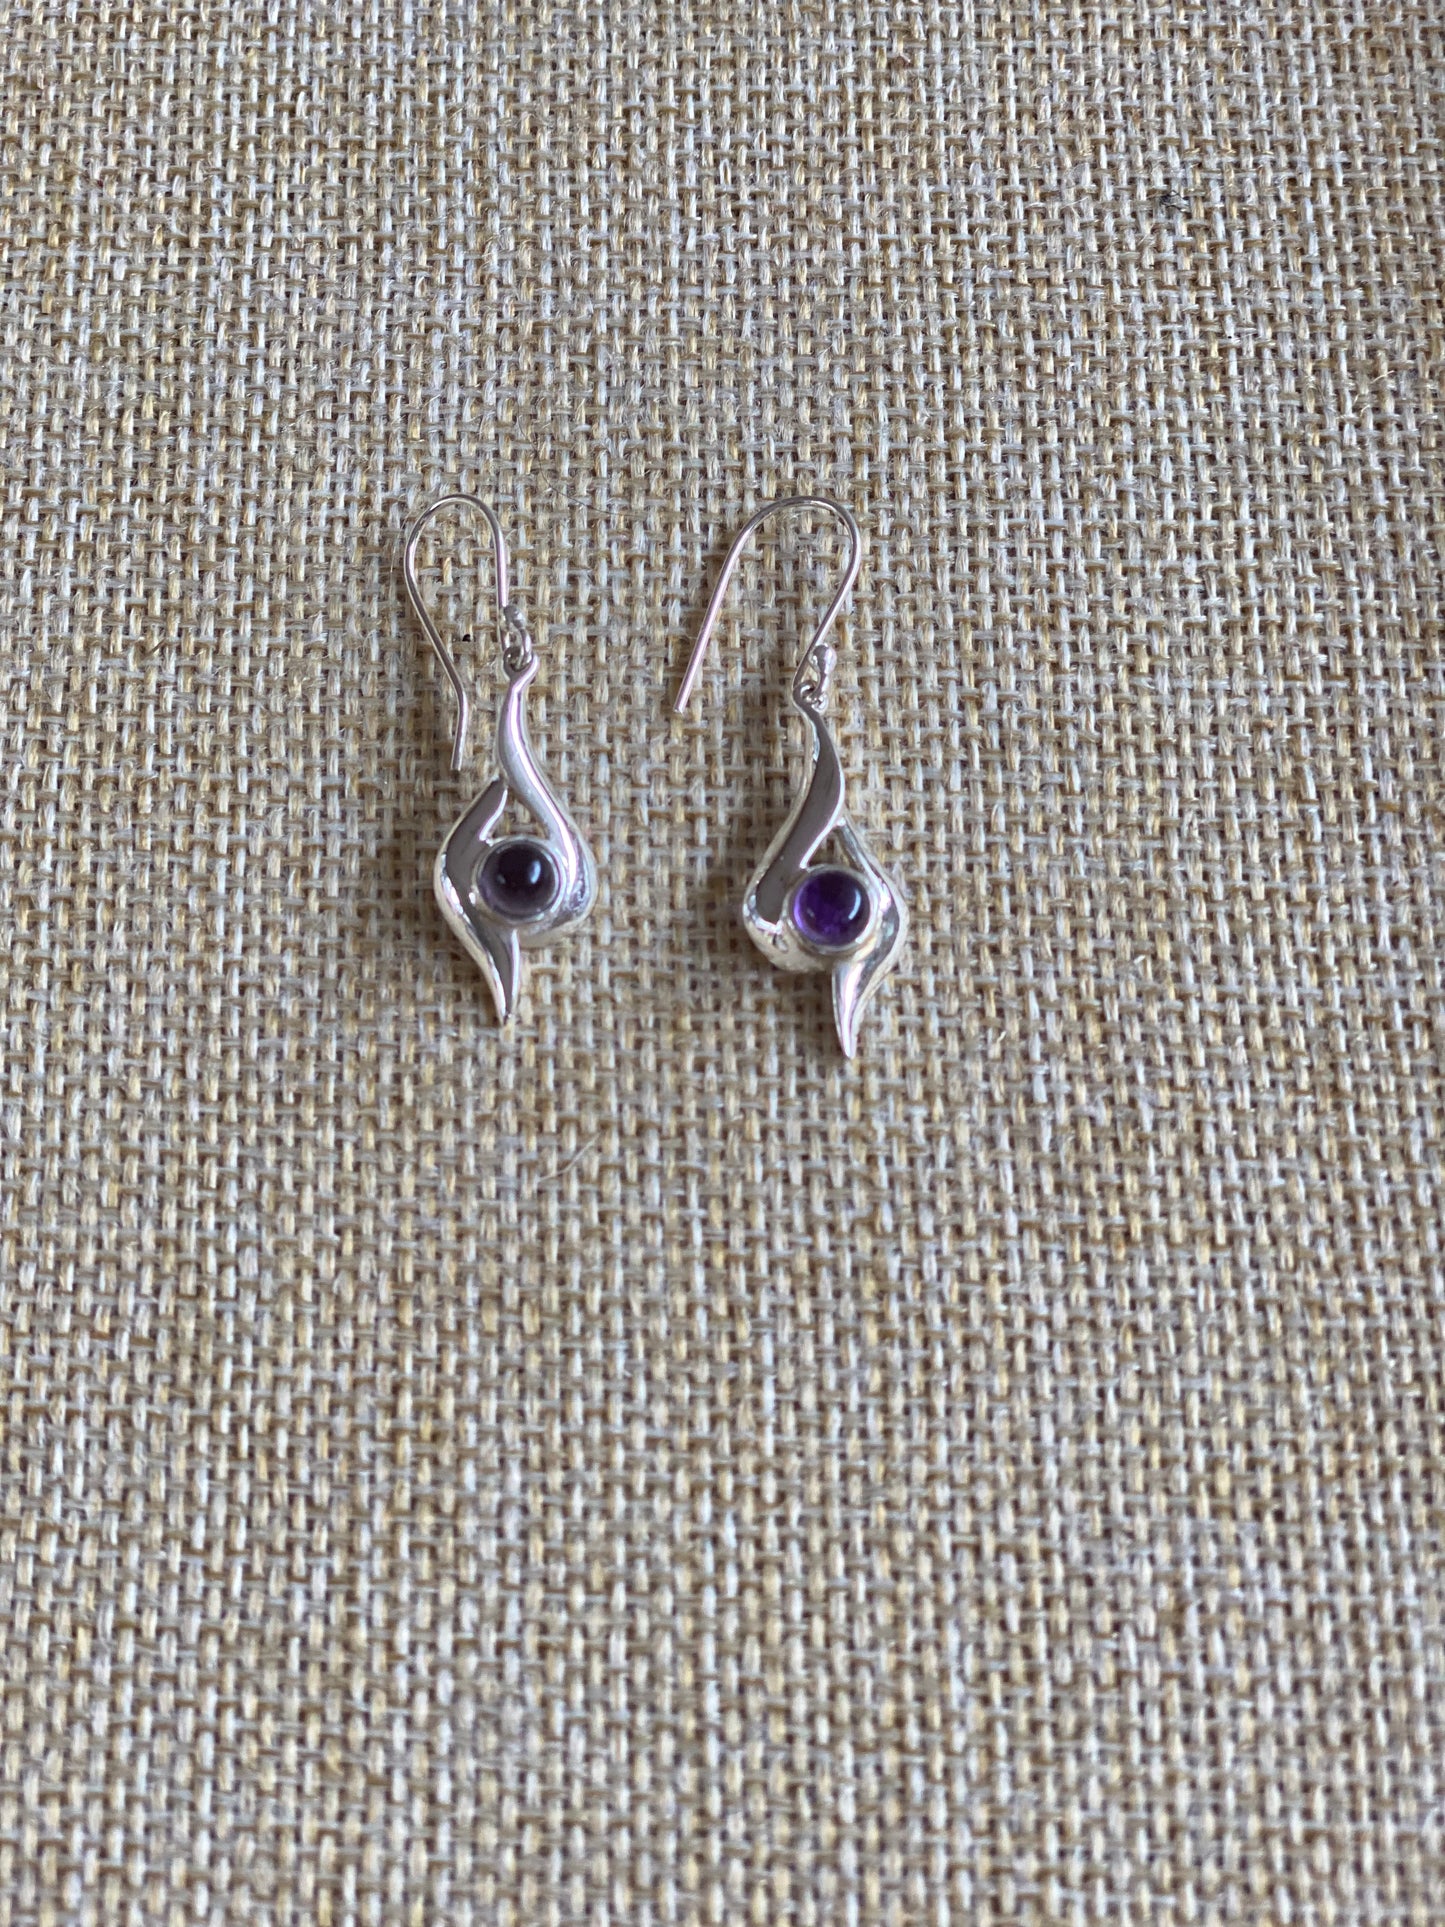 Amethyst Droplet Earrings Sterling Silver